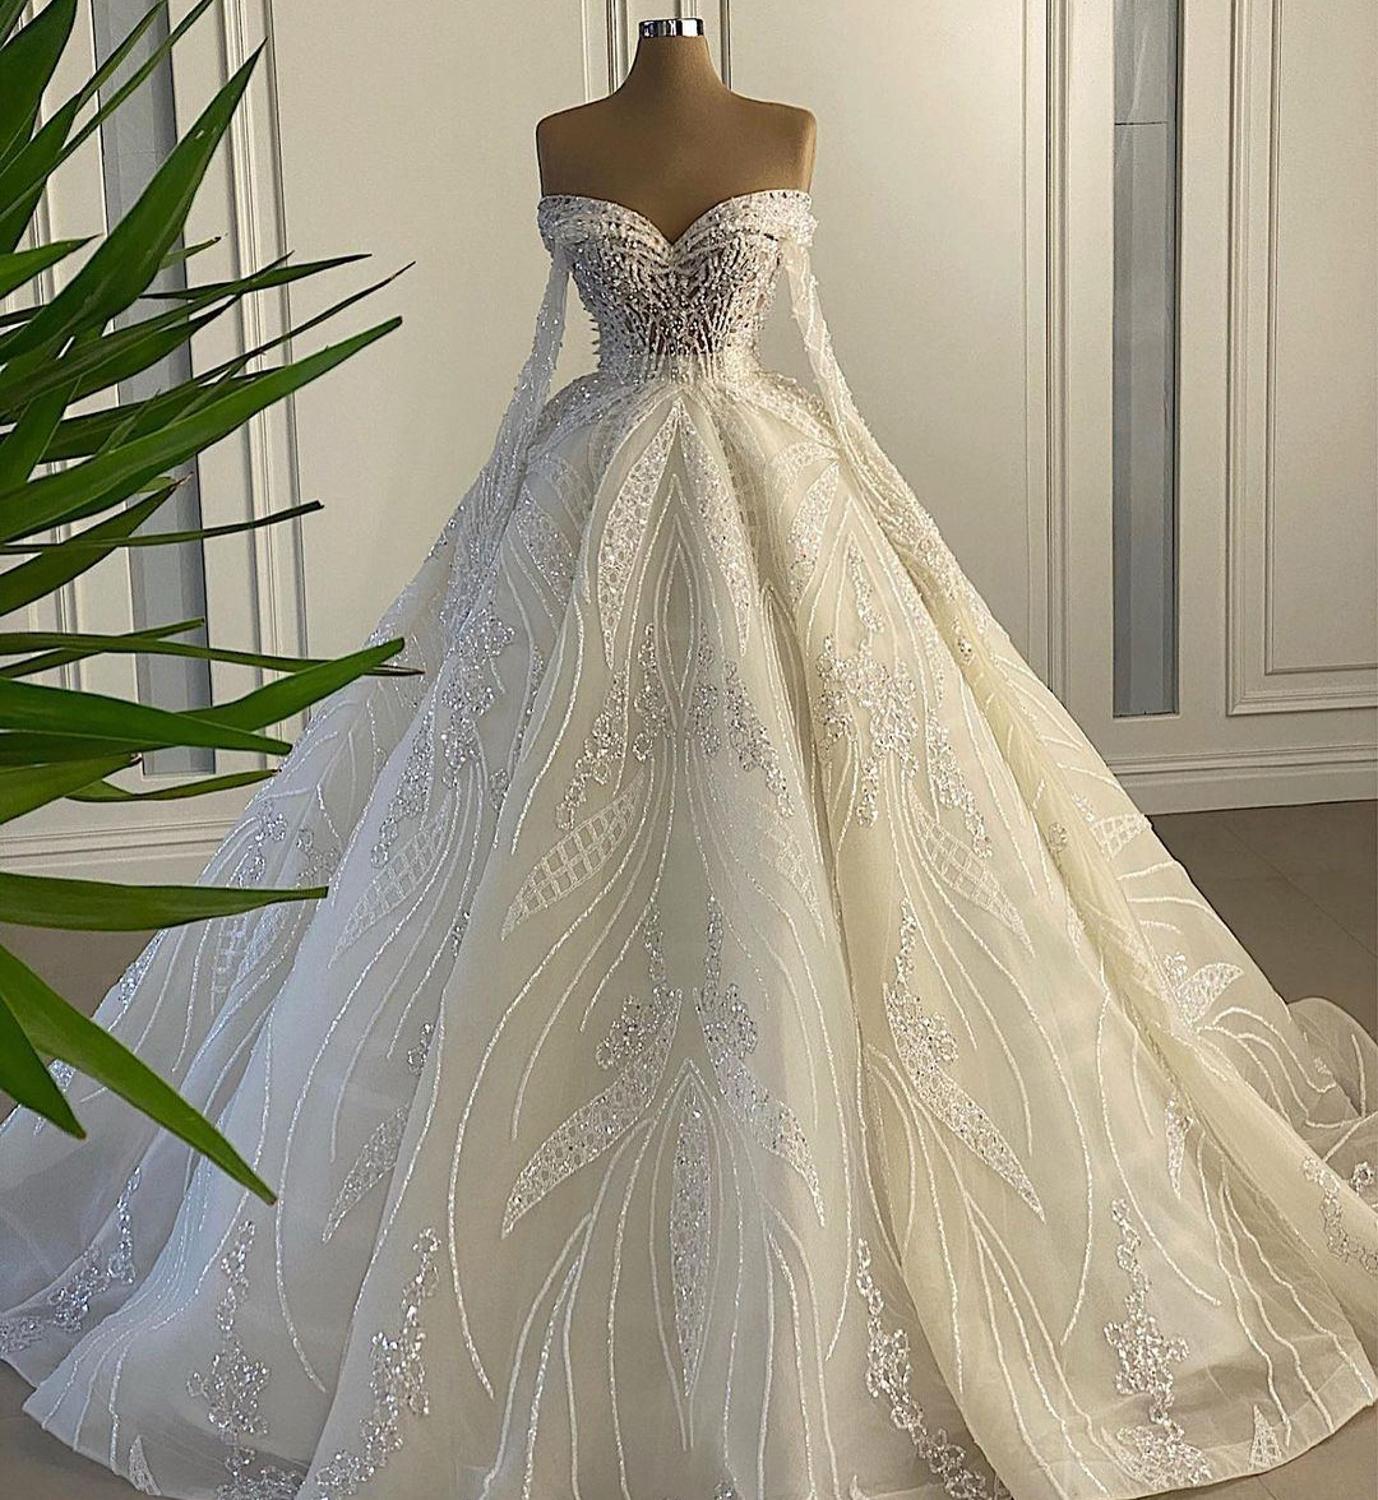 Robe De Mariee 2021 A Line Wedding Dresses Sweatheart Beads Crystal Pearls Long Sleeves Robe Dresses Mariage Bride Dresses